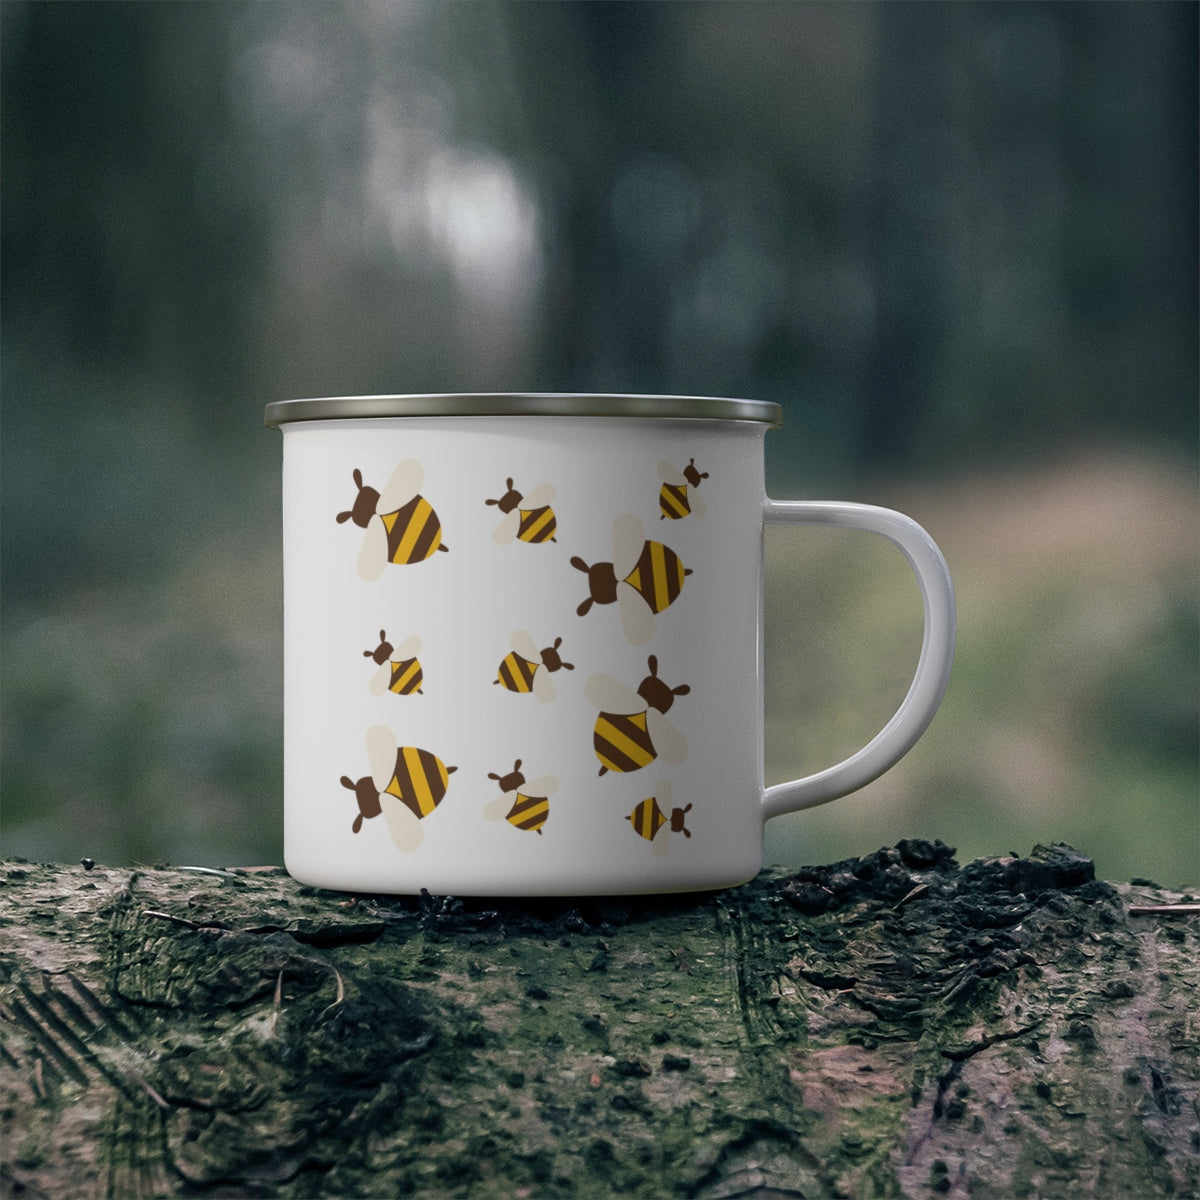 My Mum Is Bee-autiful - Enamel Mug Enamel Mug animal Mum